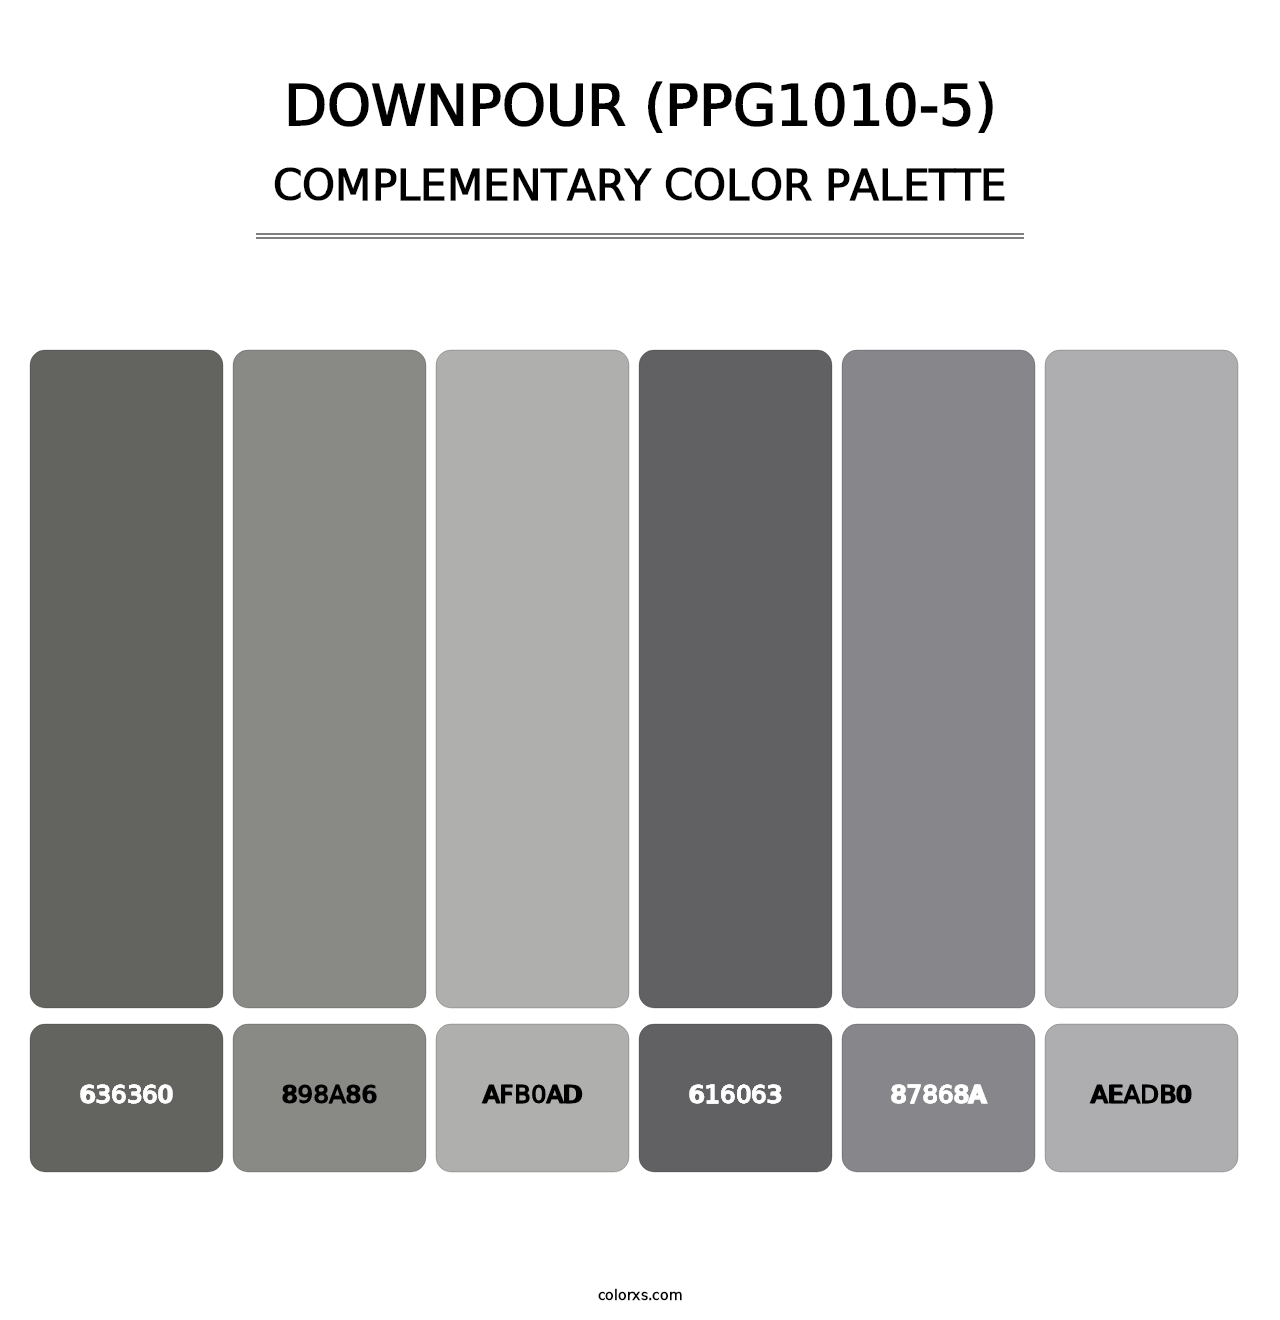 Downpour (PPG1010-5) - Complementary Color Palette